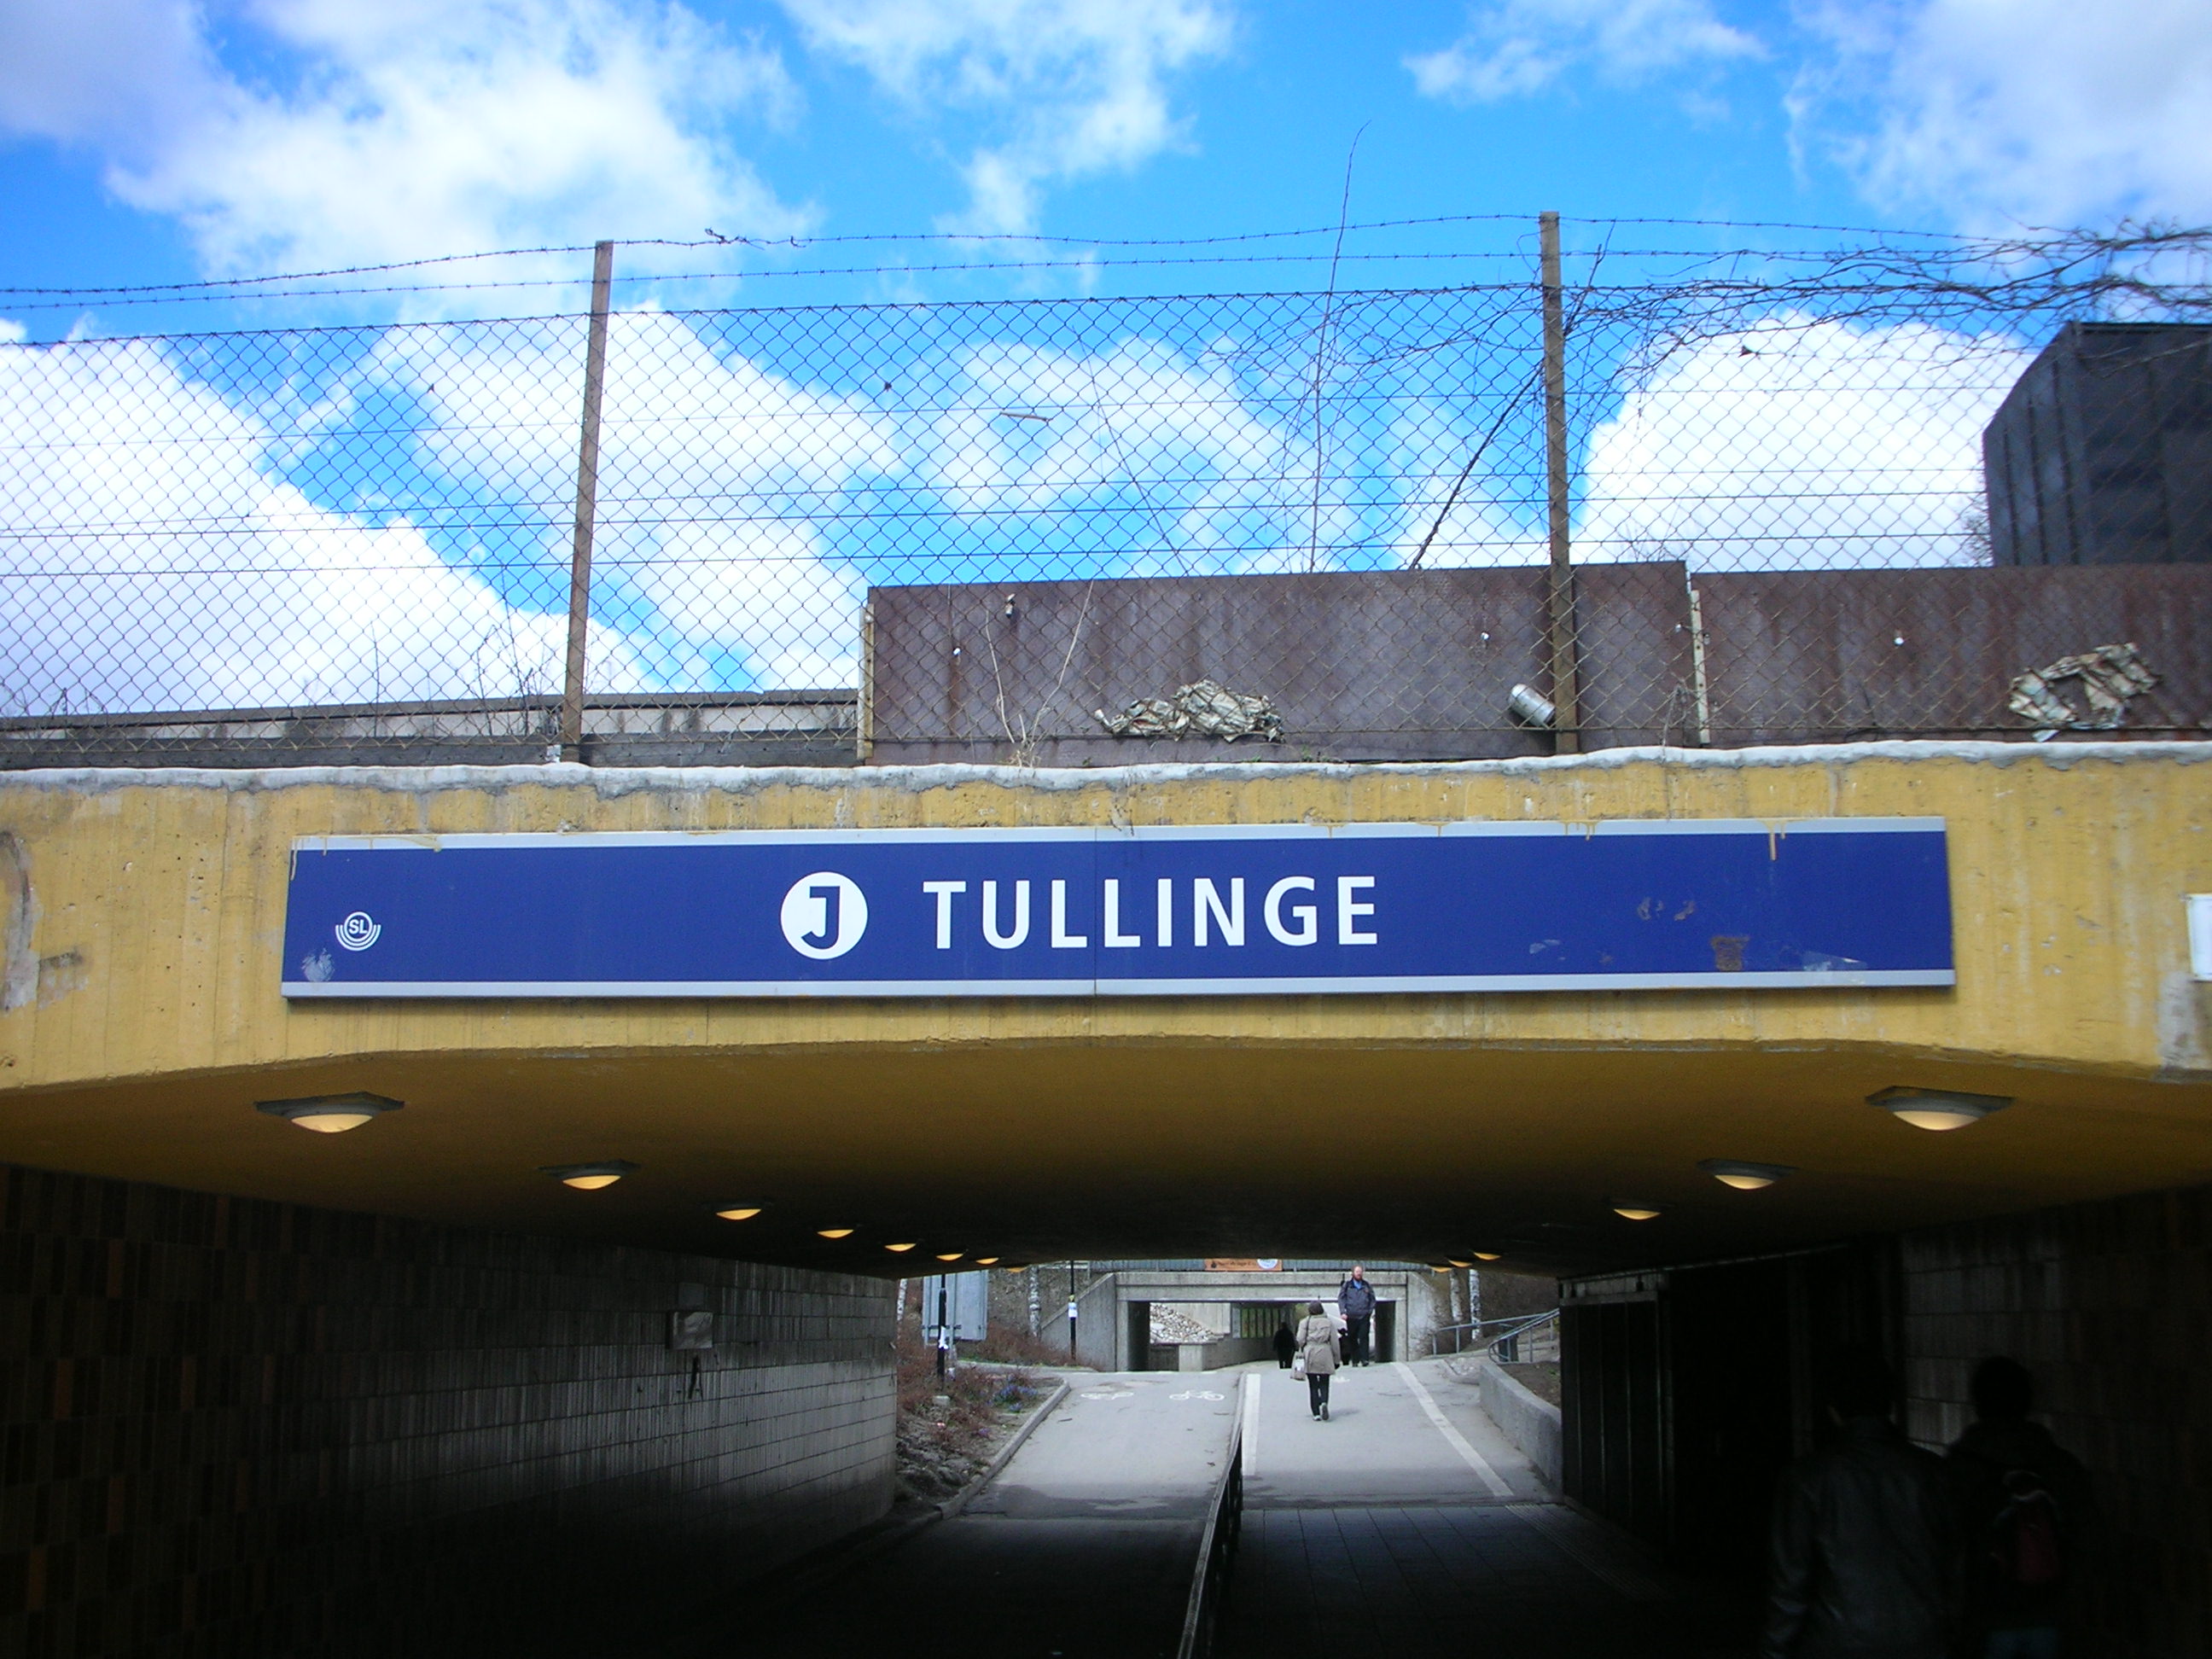 Tullinge station